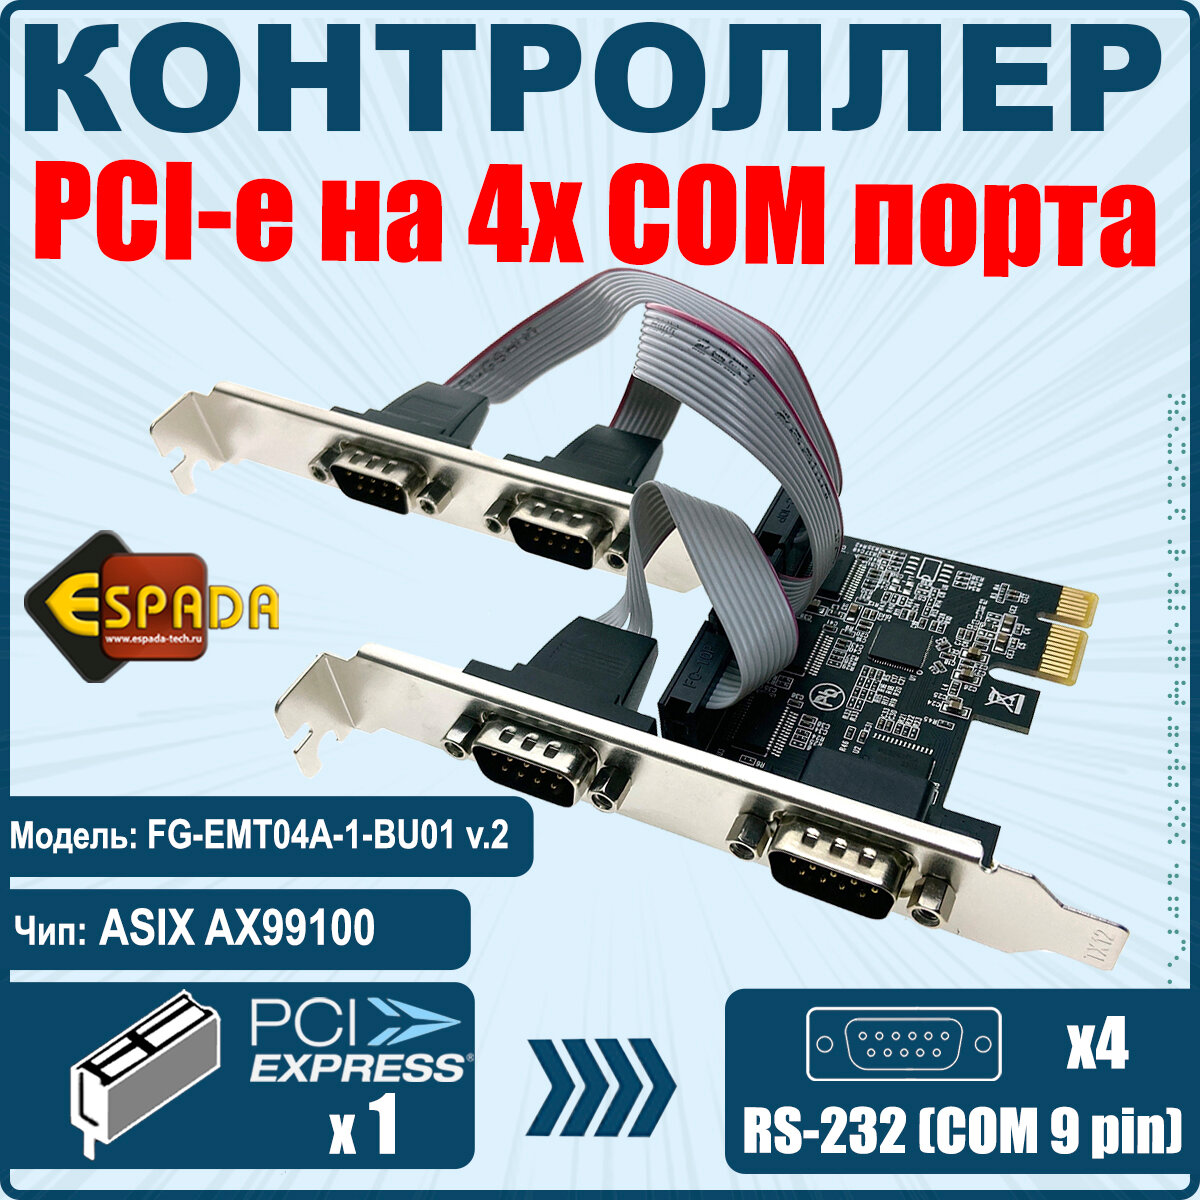 Контроллер PCI-E 4S модель FG-EMT04A-1-BU01 ver2 чип AX99100 ESPADA